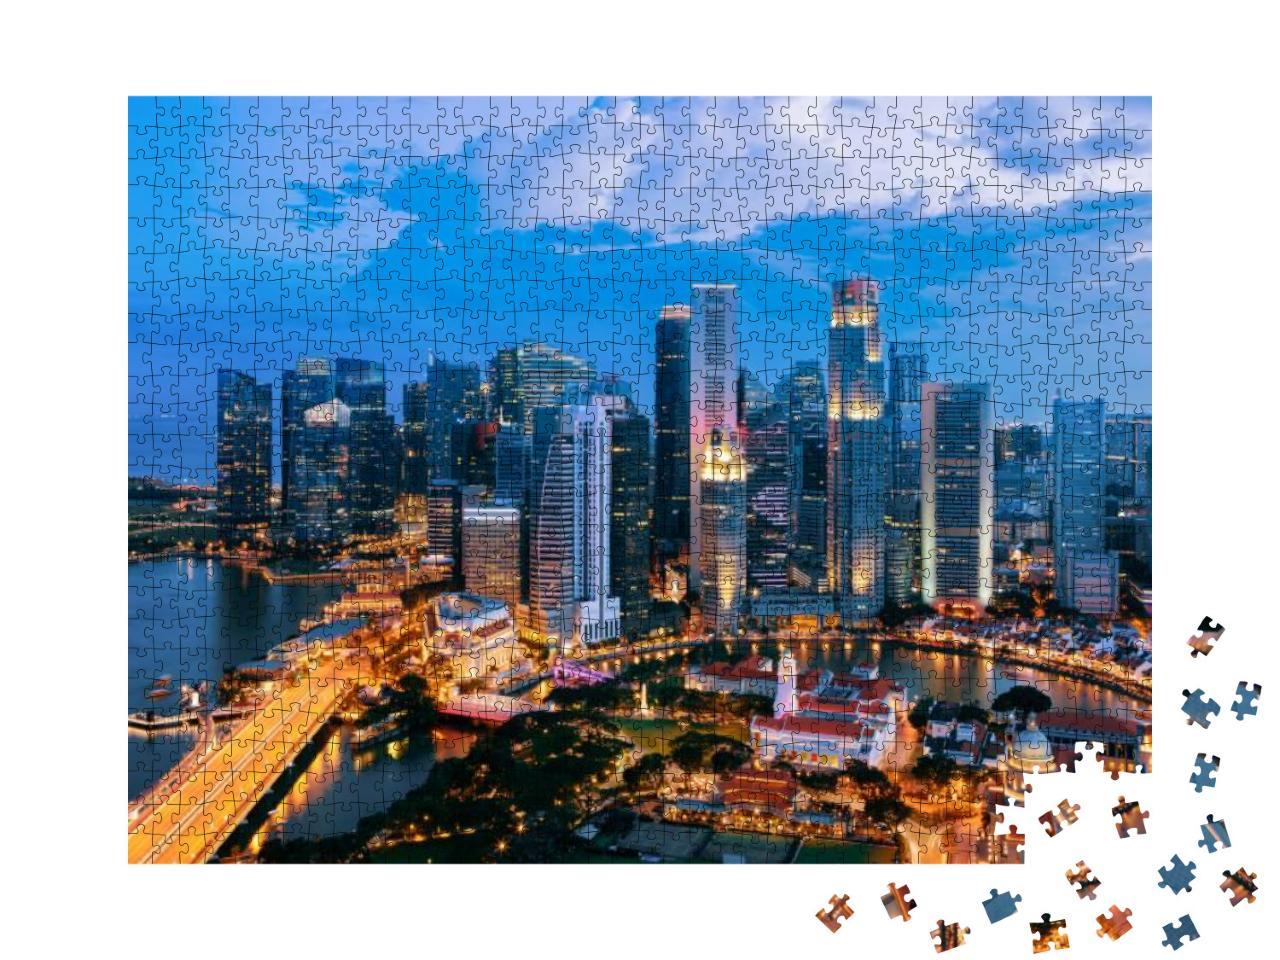 Singapore Cityscape At Dusk. Landscape of Singapore Busin... Jigsaw Puzzle with 1000 pieces